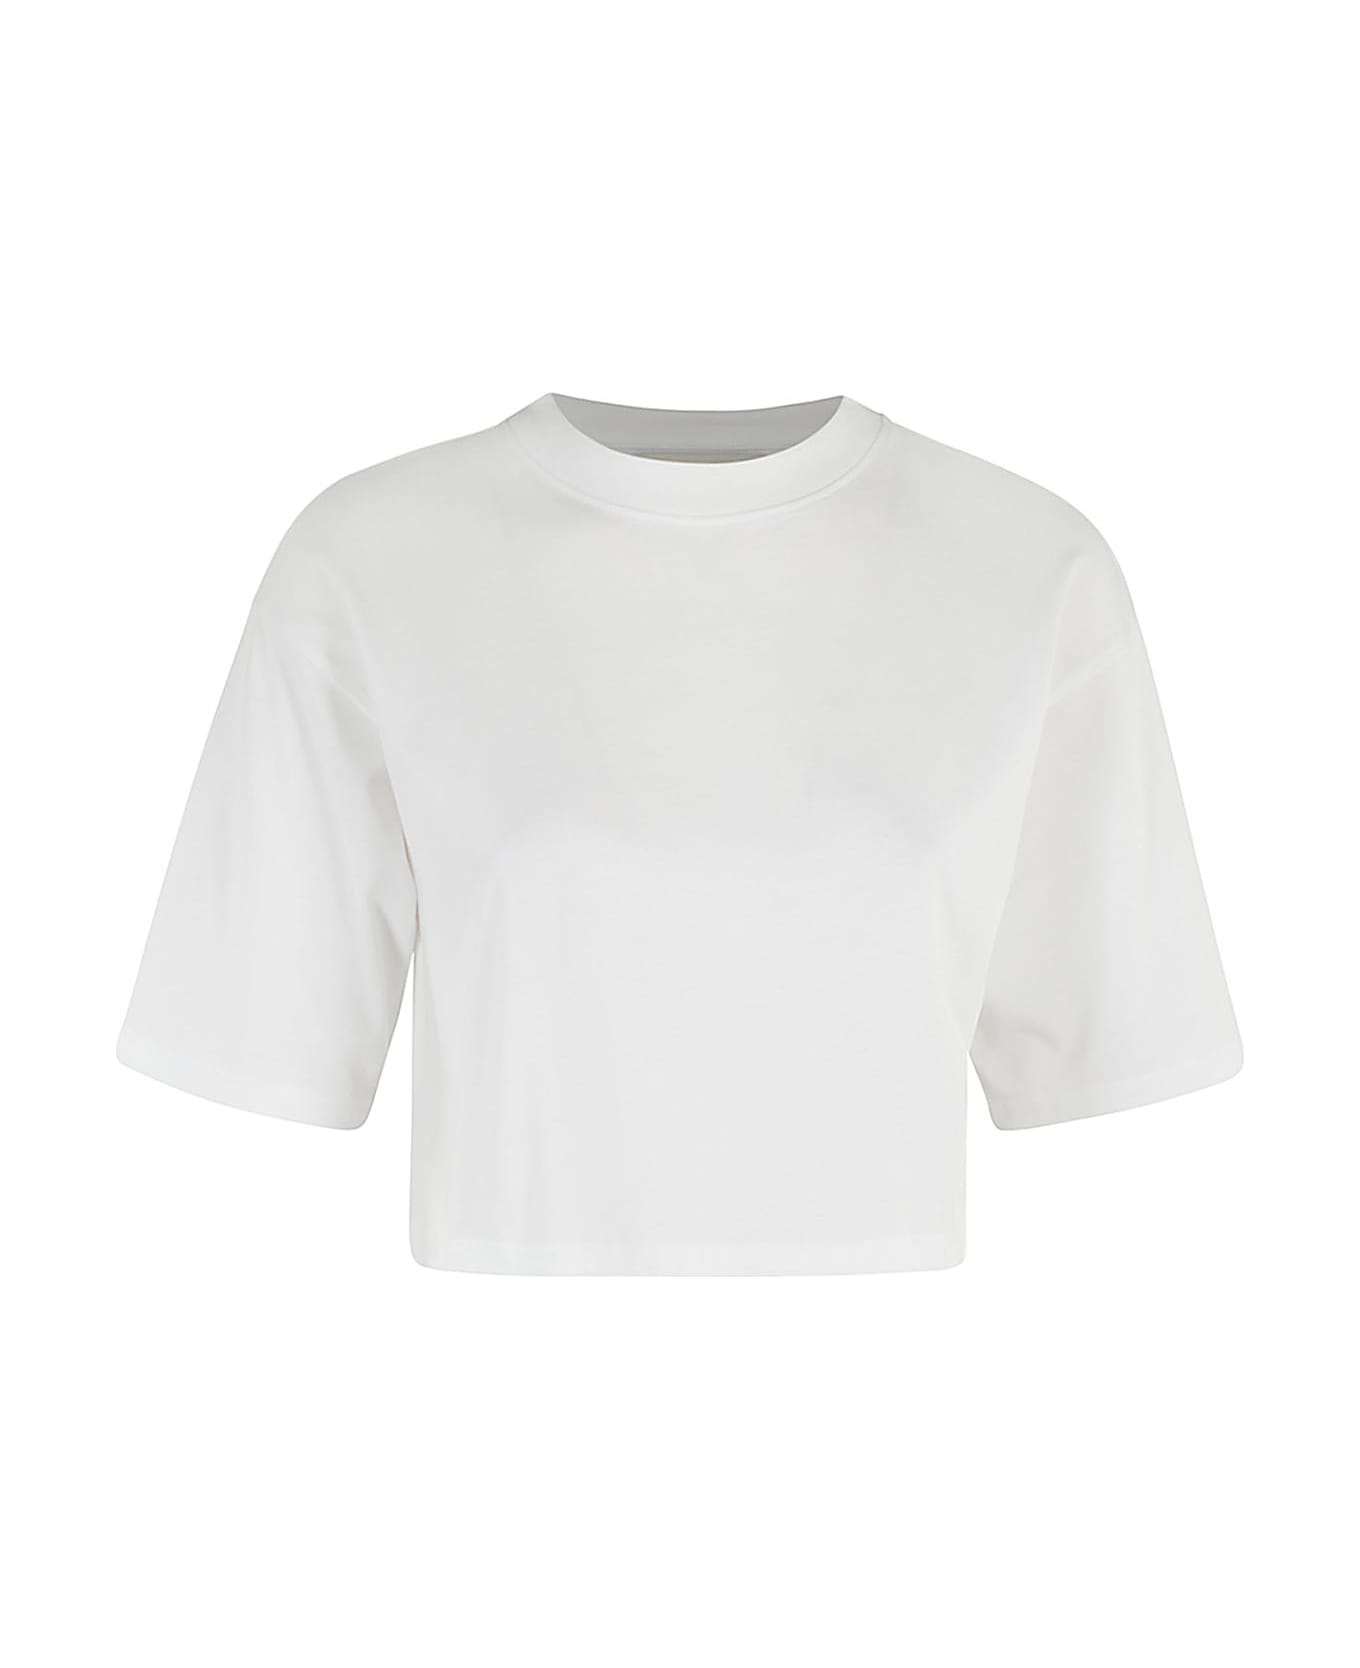 Loulou Studio Cropped Tshirt - White